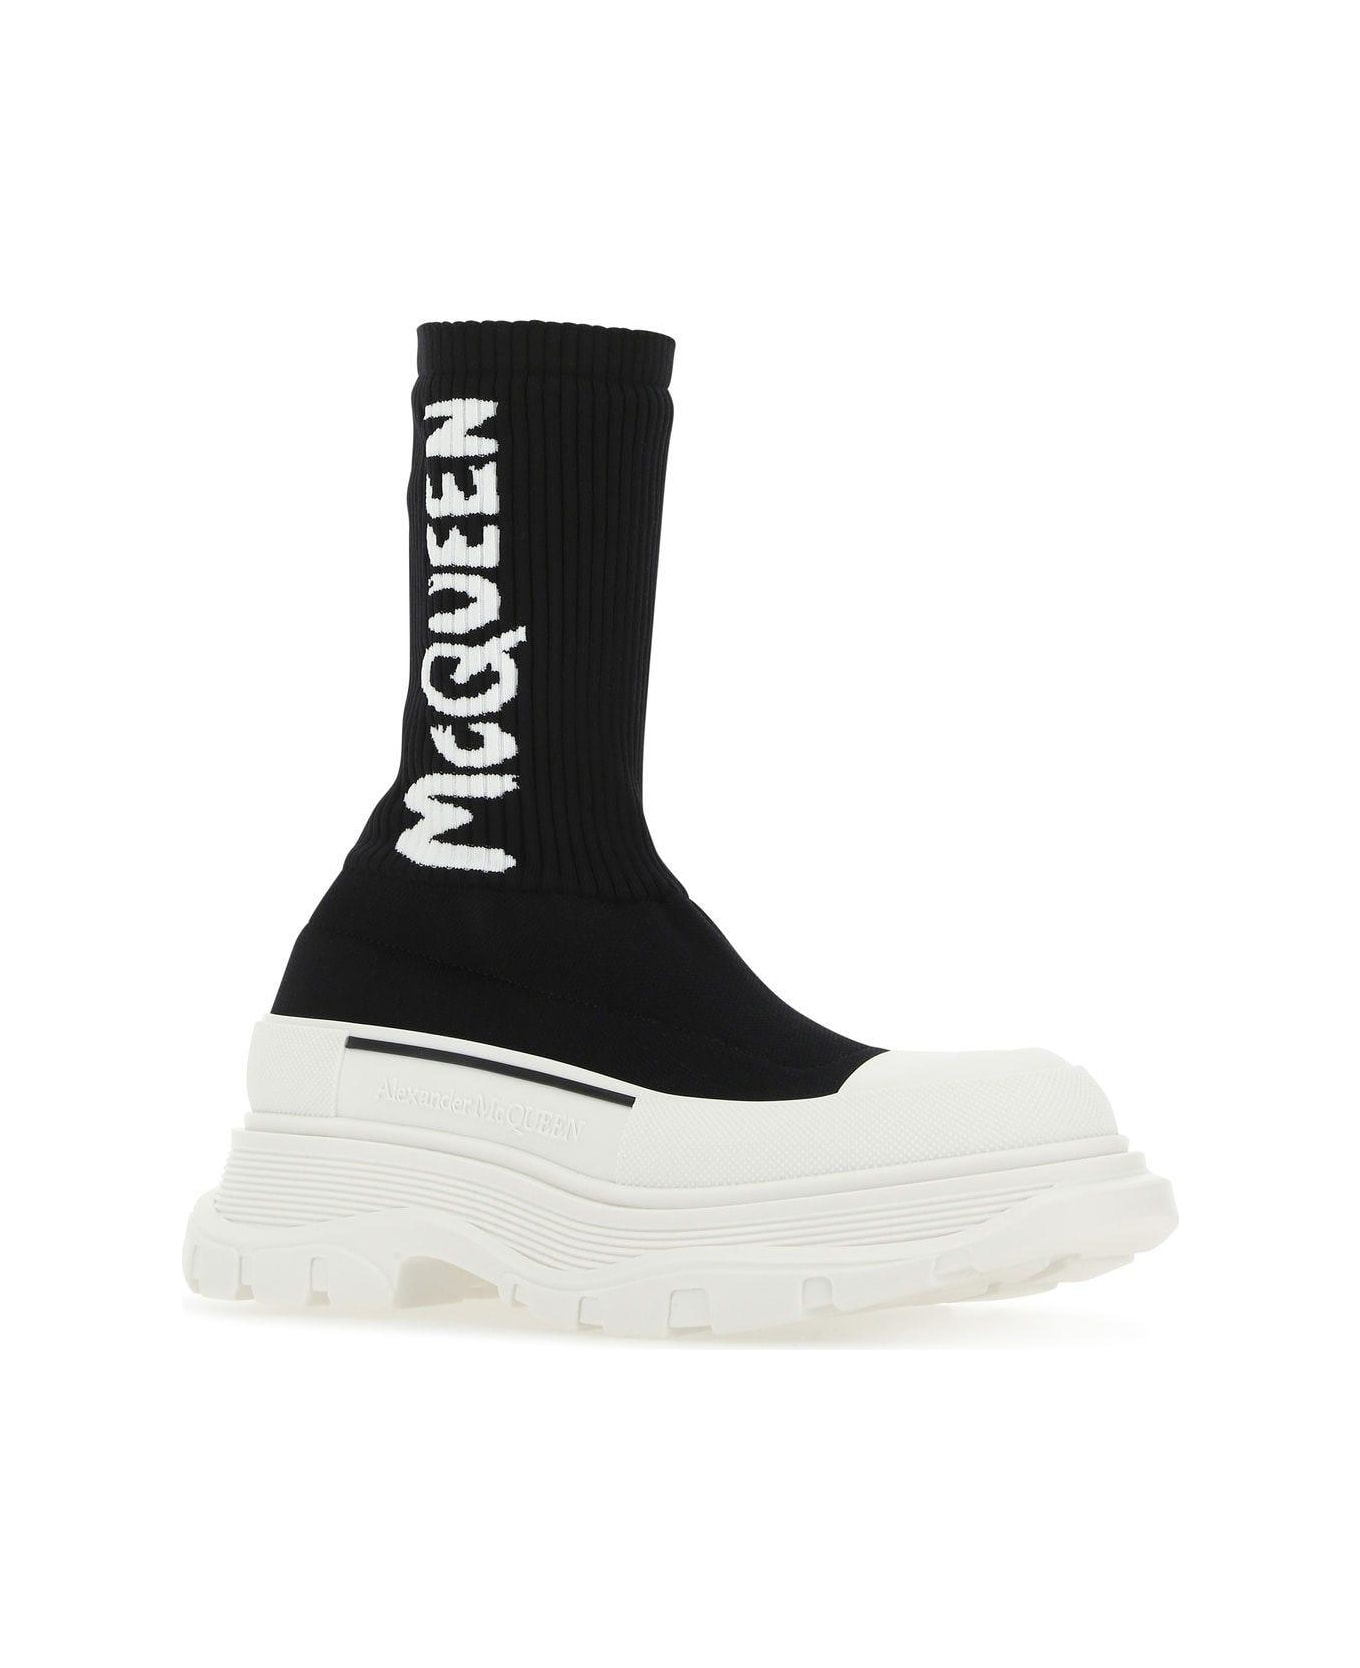 Alexander McQueen Black Stretch Nylon Tread Slick Sneakers - Black スニーカー